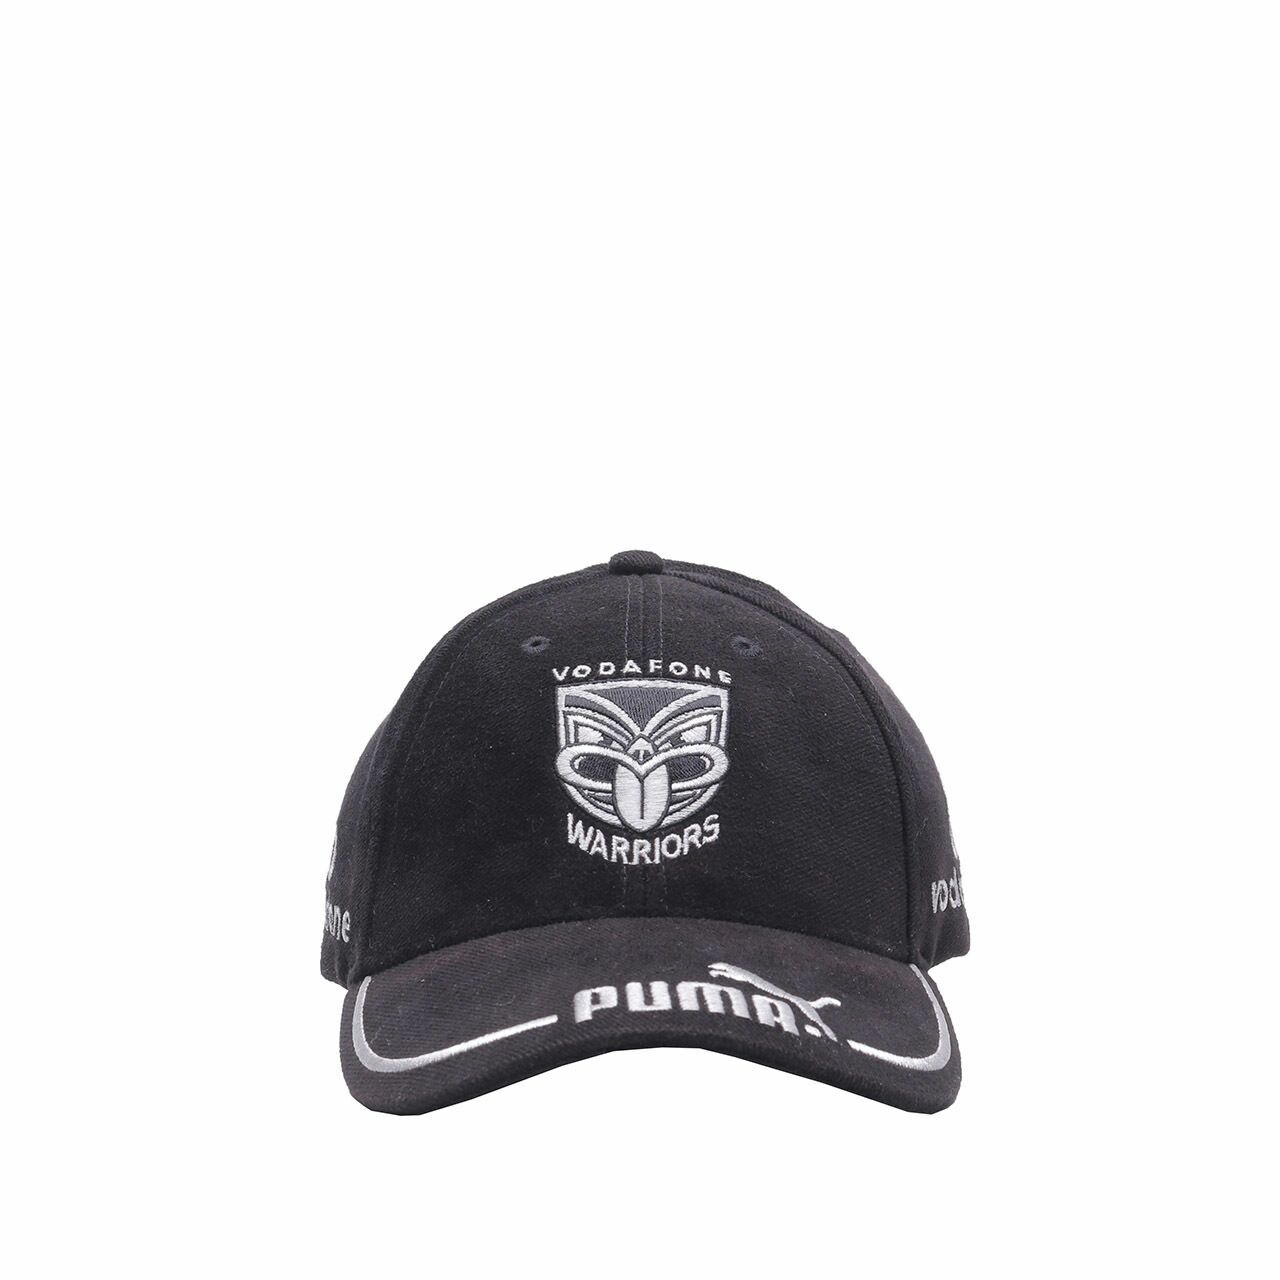 Puma Black Hats